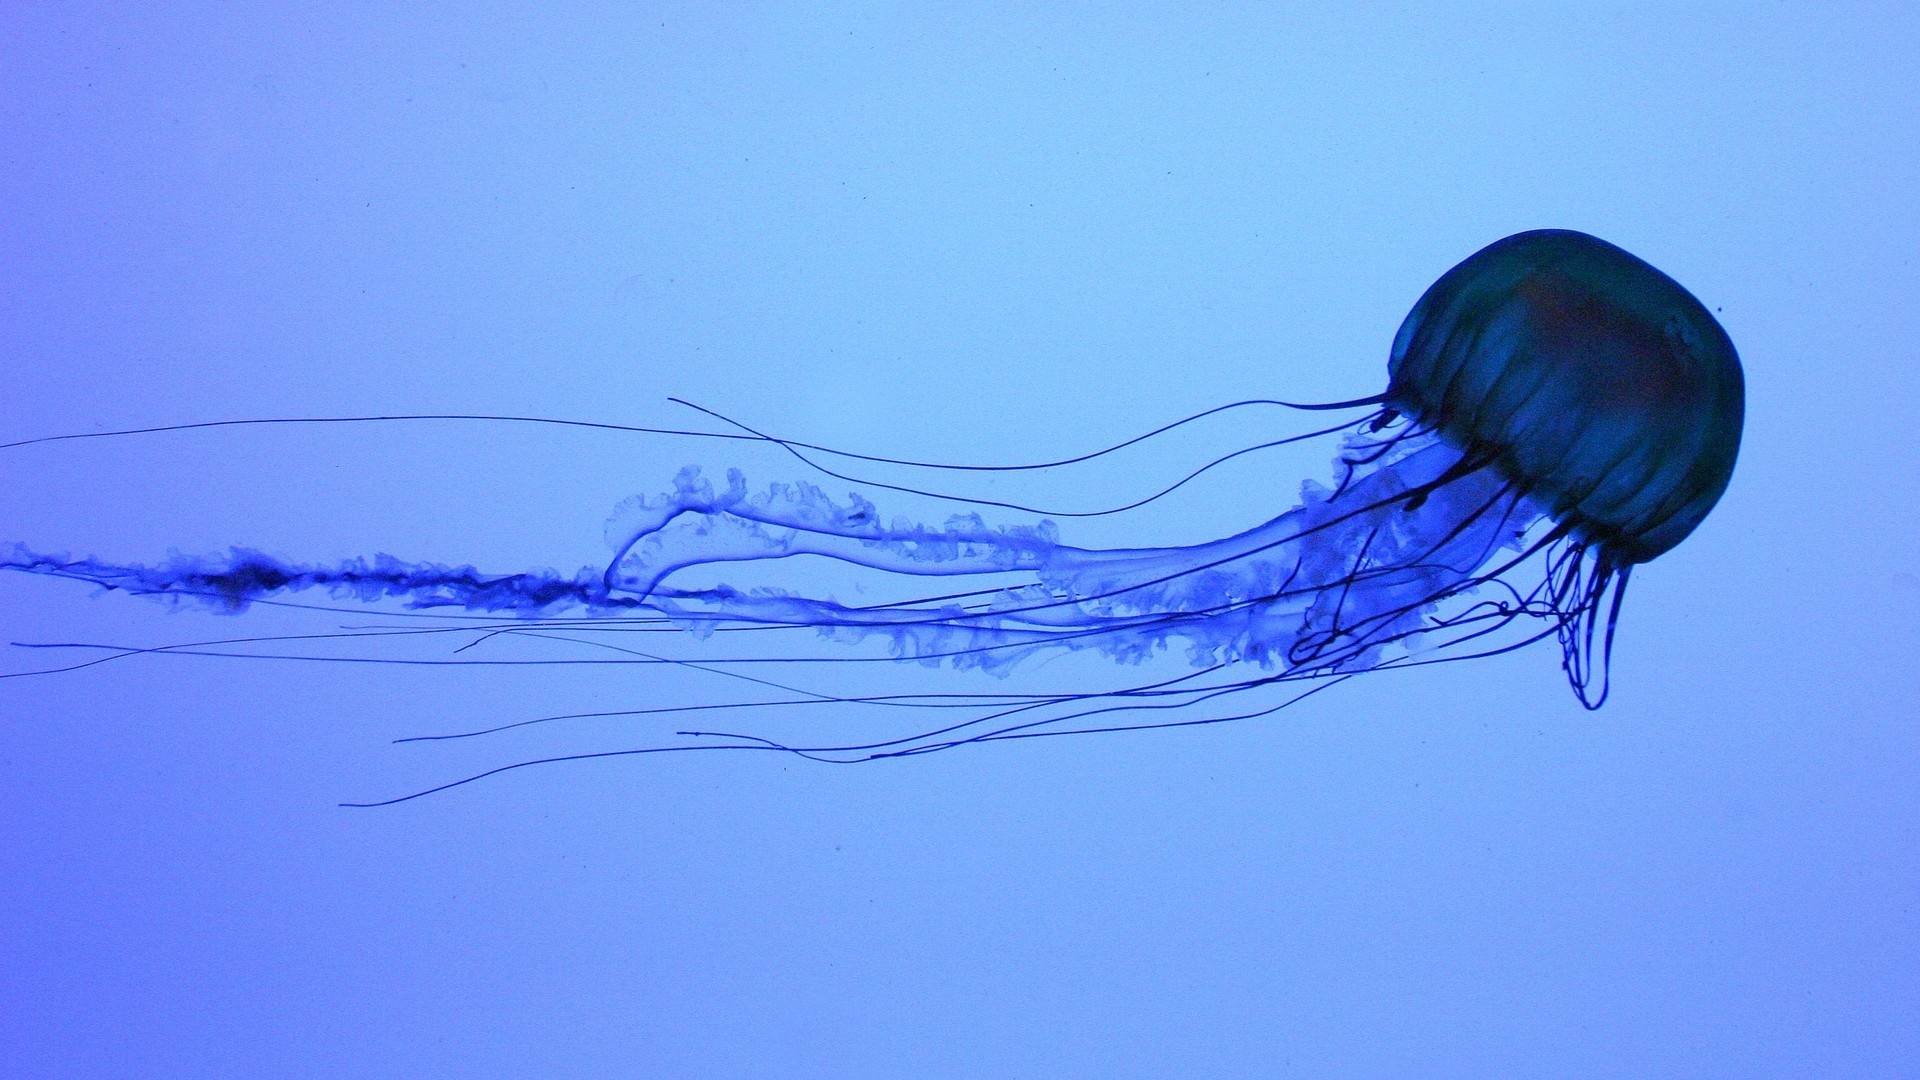 Jellyfish wallpaper photo hd